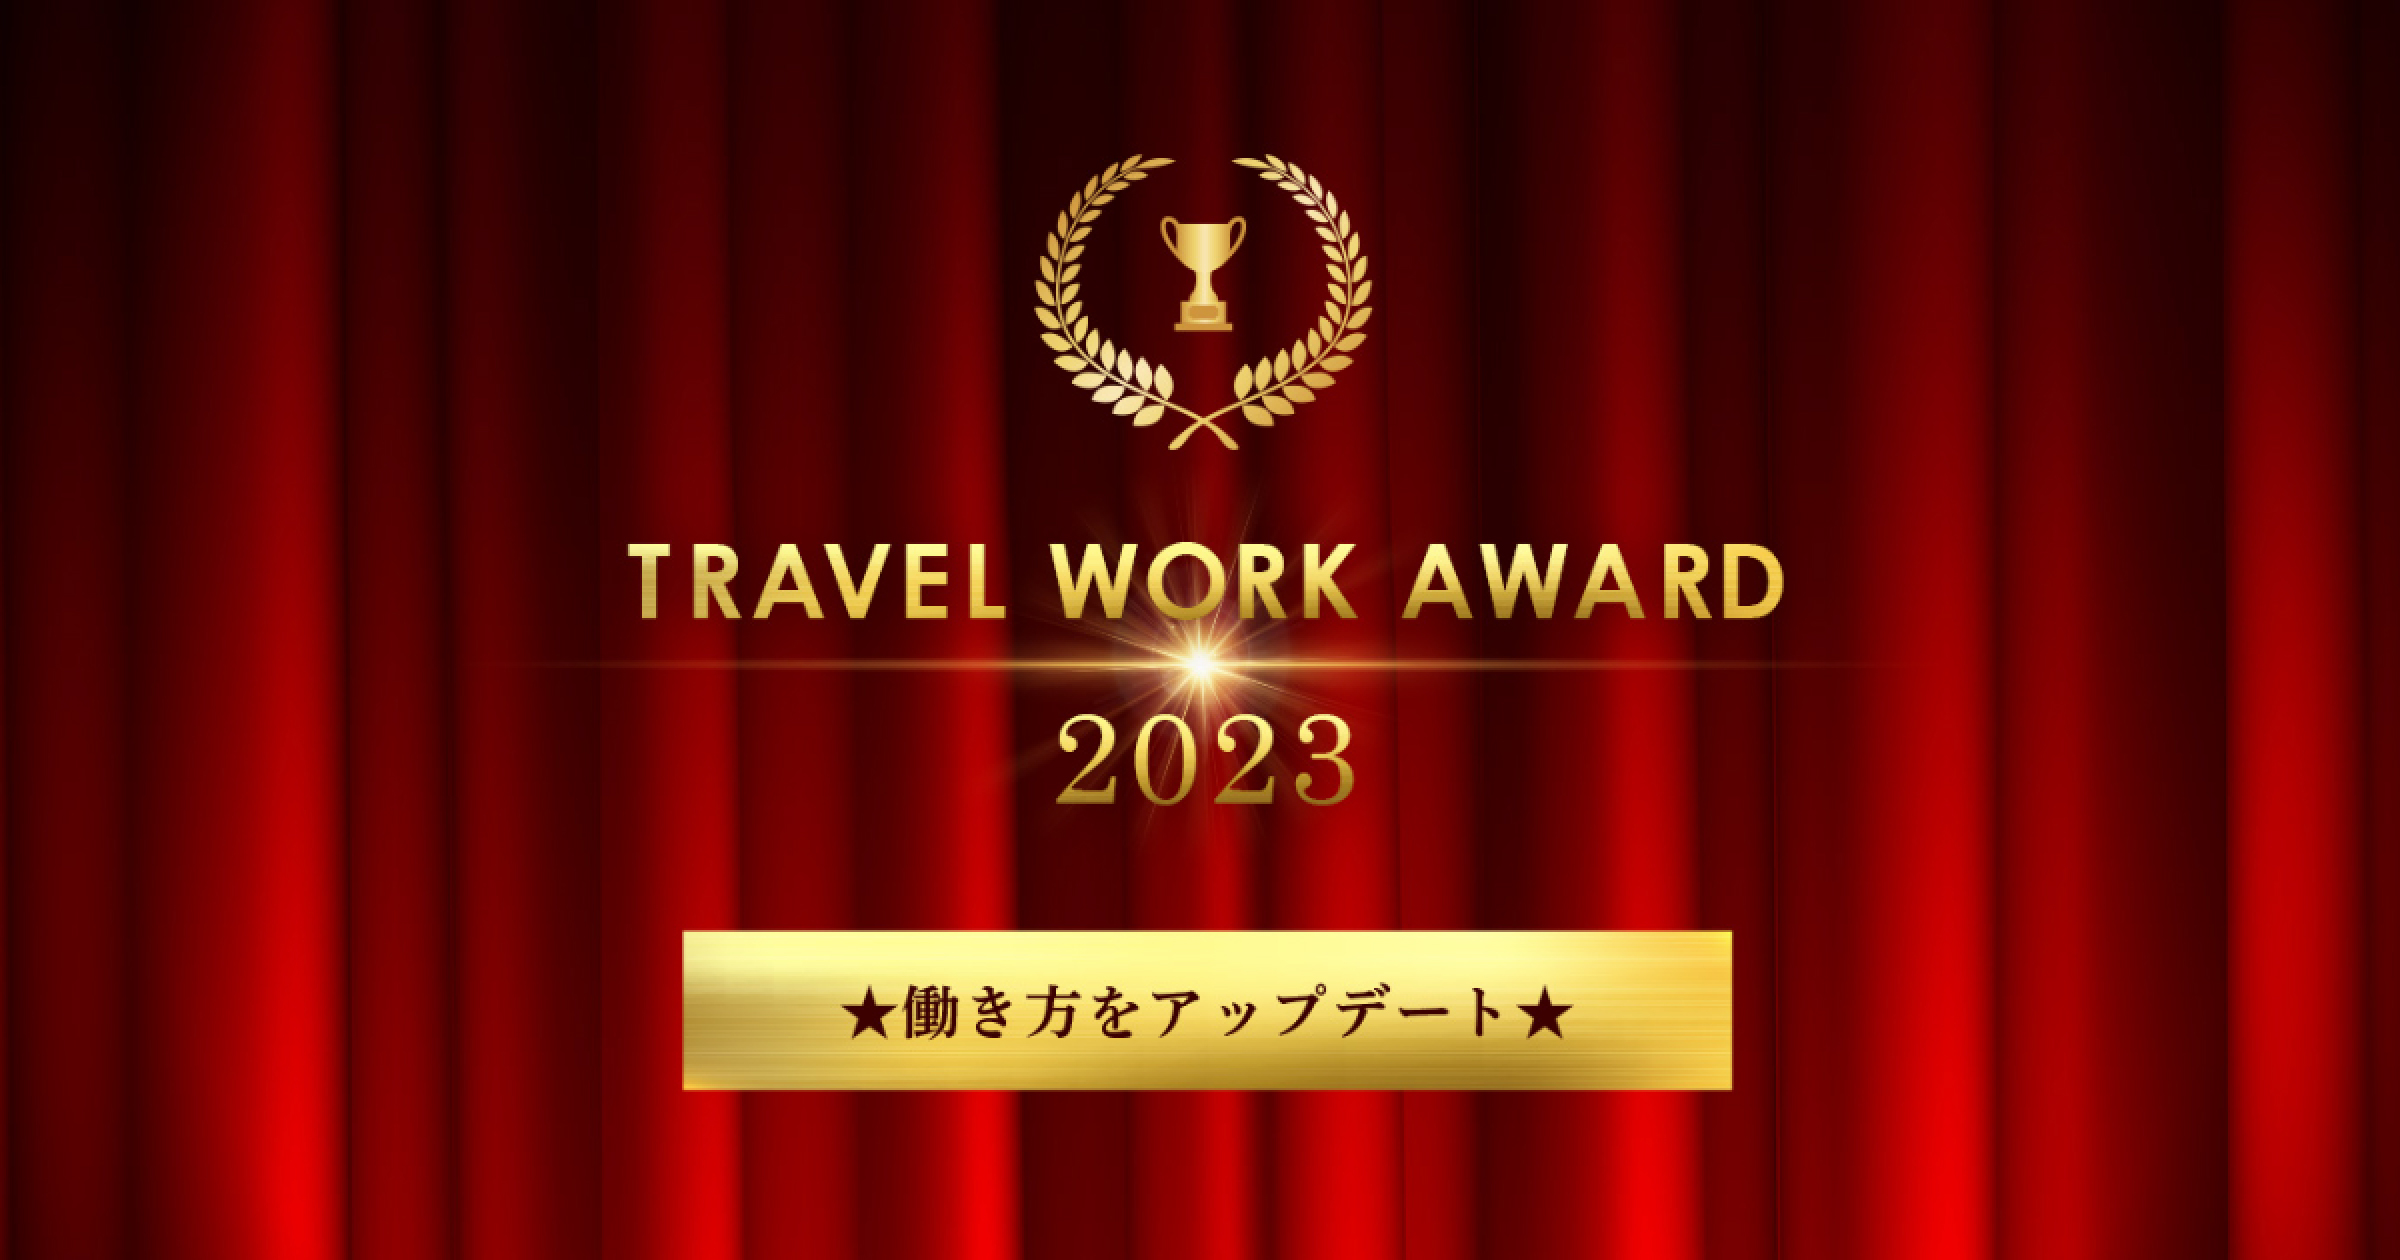 TRAVEL WORK AWARD 2023